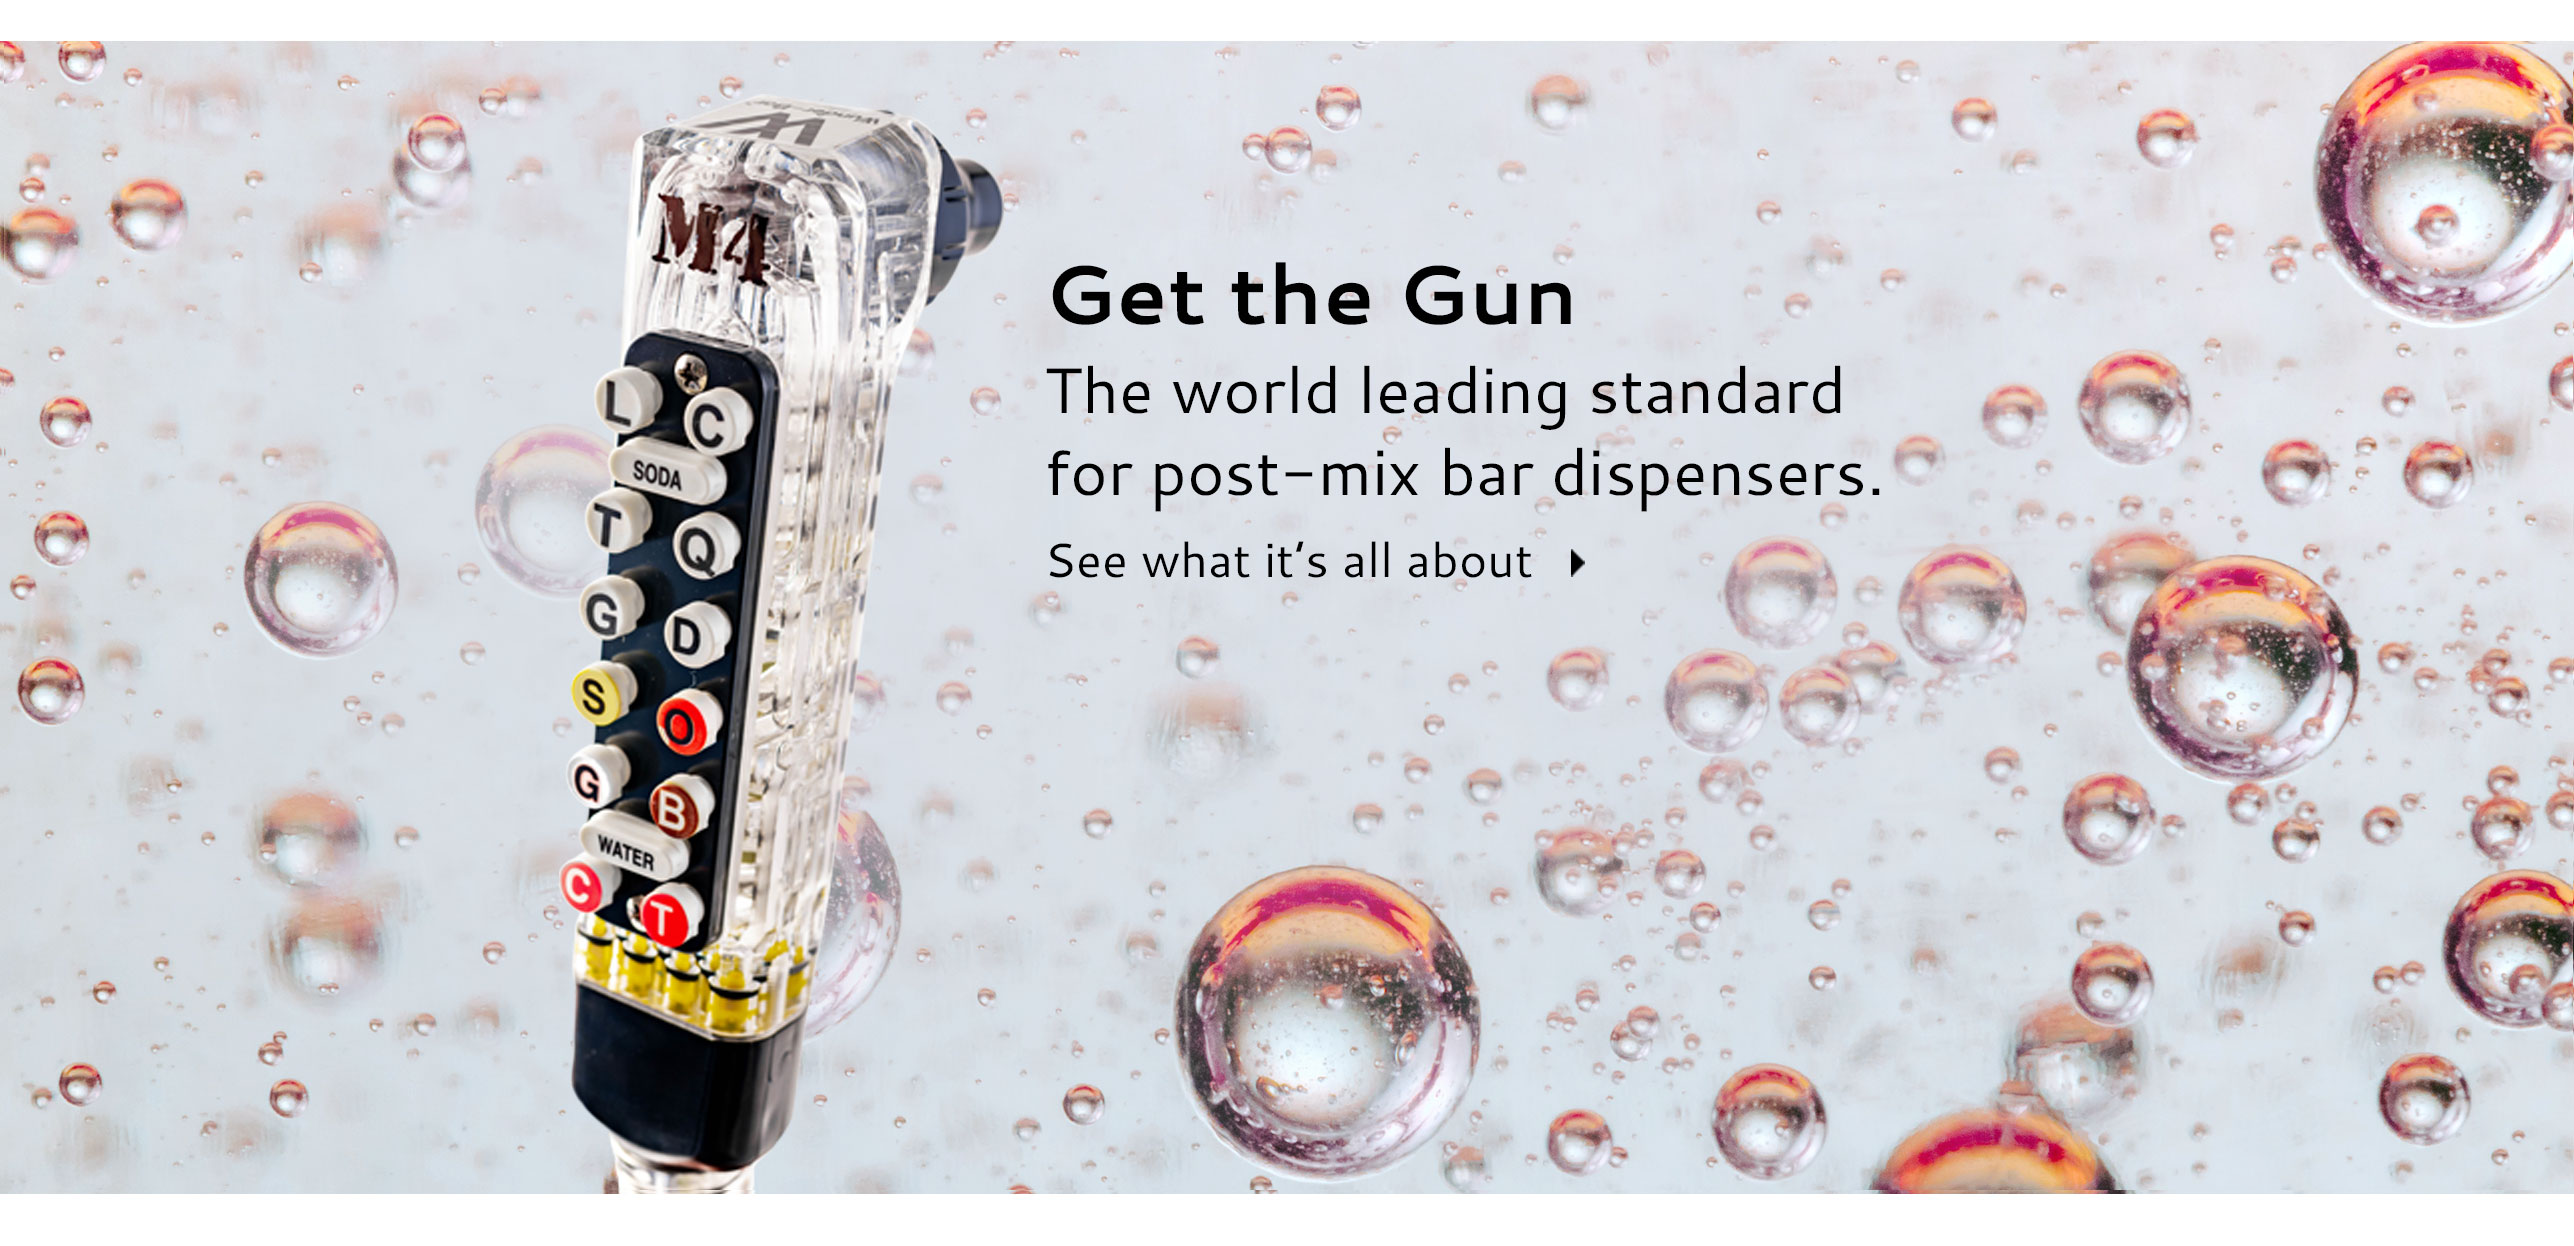 Bargun
The world leading standard for post-mix bar dispensers.